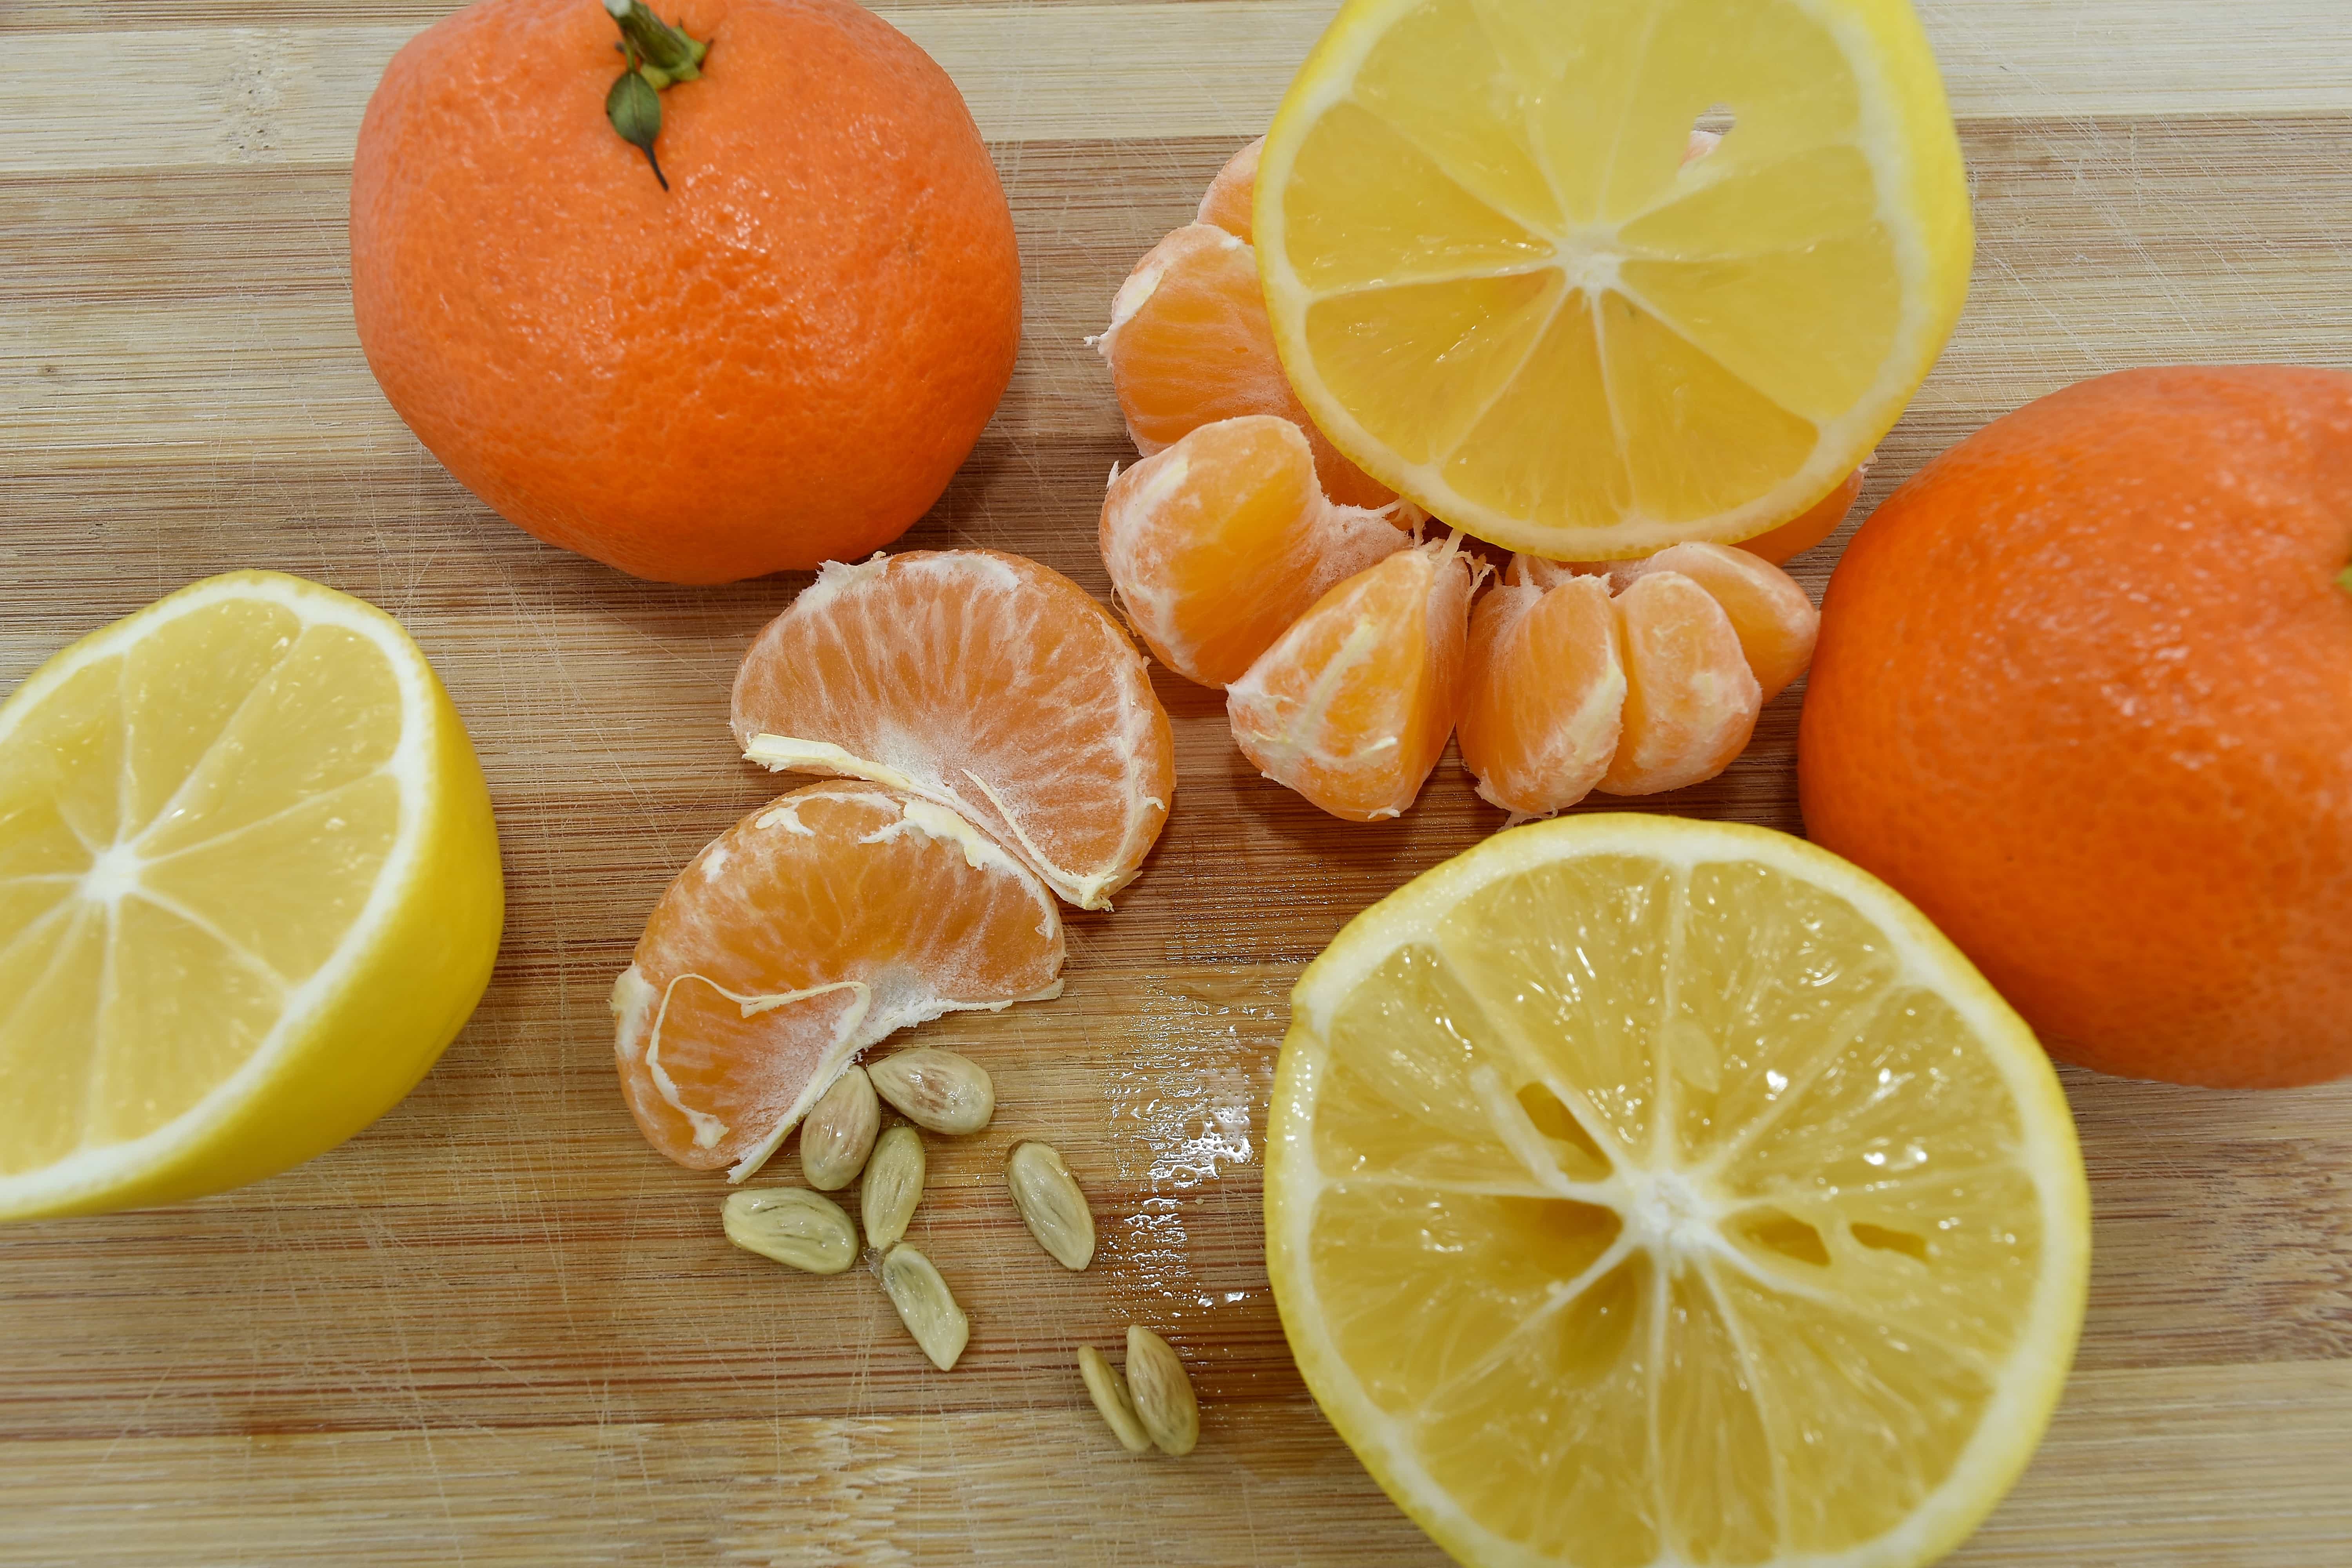 Мандарин citrus. Цитрус мандарин +апельсин. Цитрусовые — апельсины, лимоны, померанцы. Померанец лимон апельсин. Лимон и мандарин.